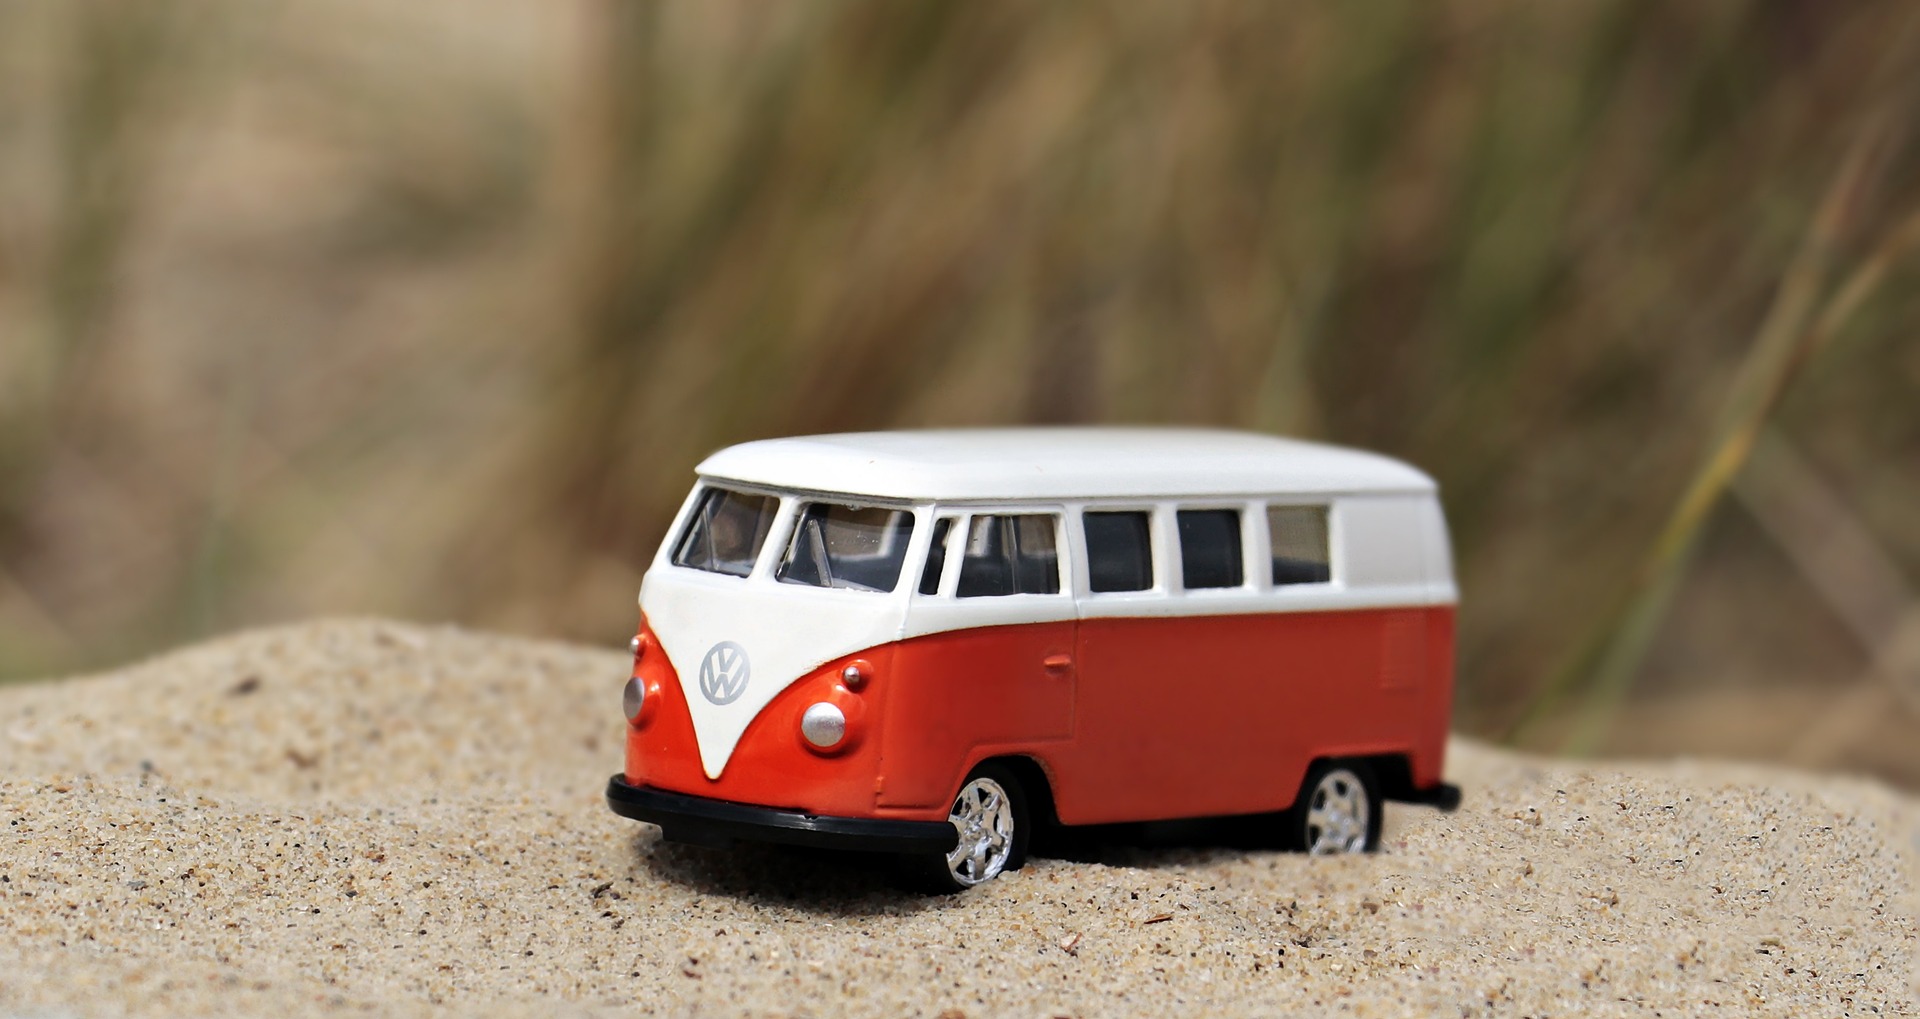 Campingwagen-Modell am Strand